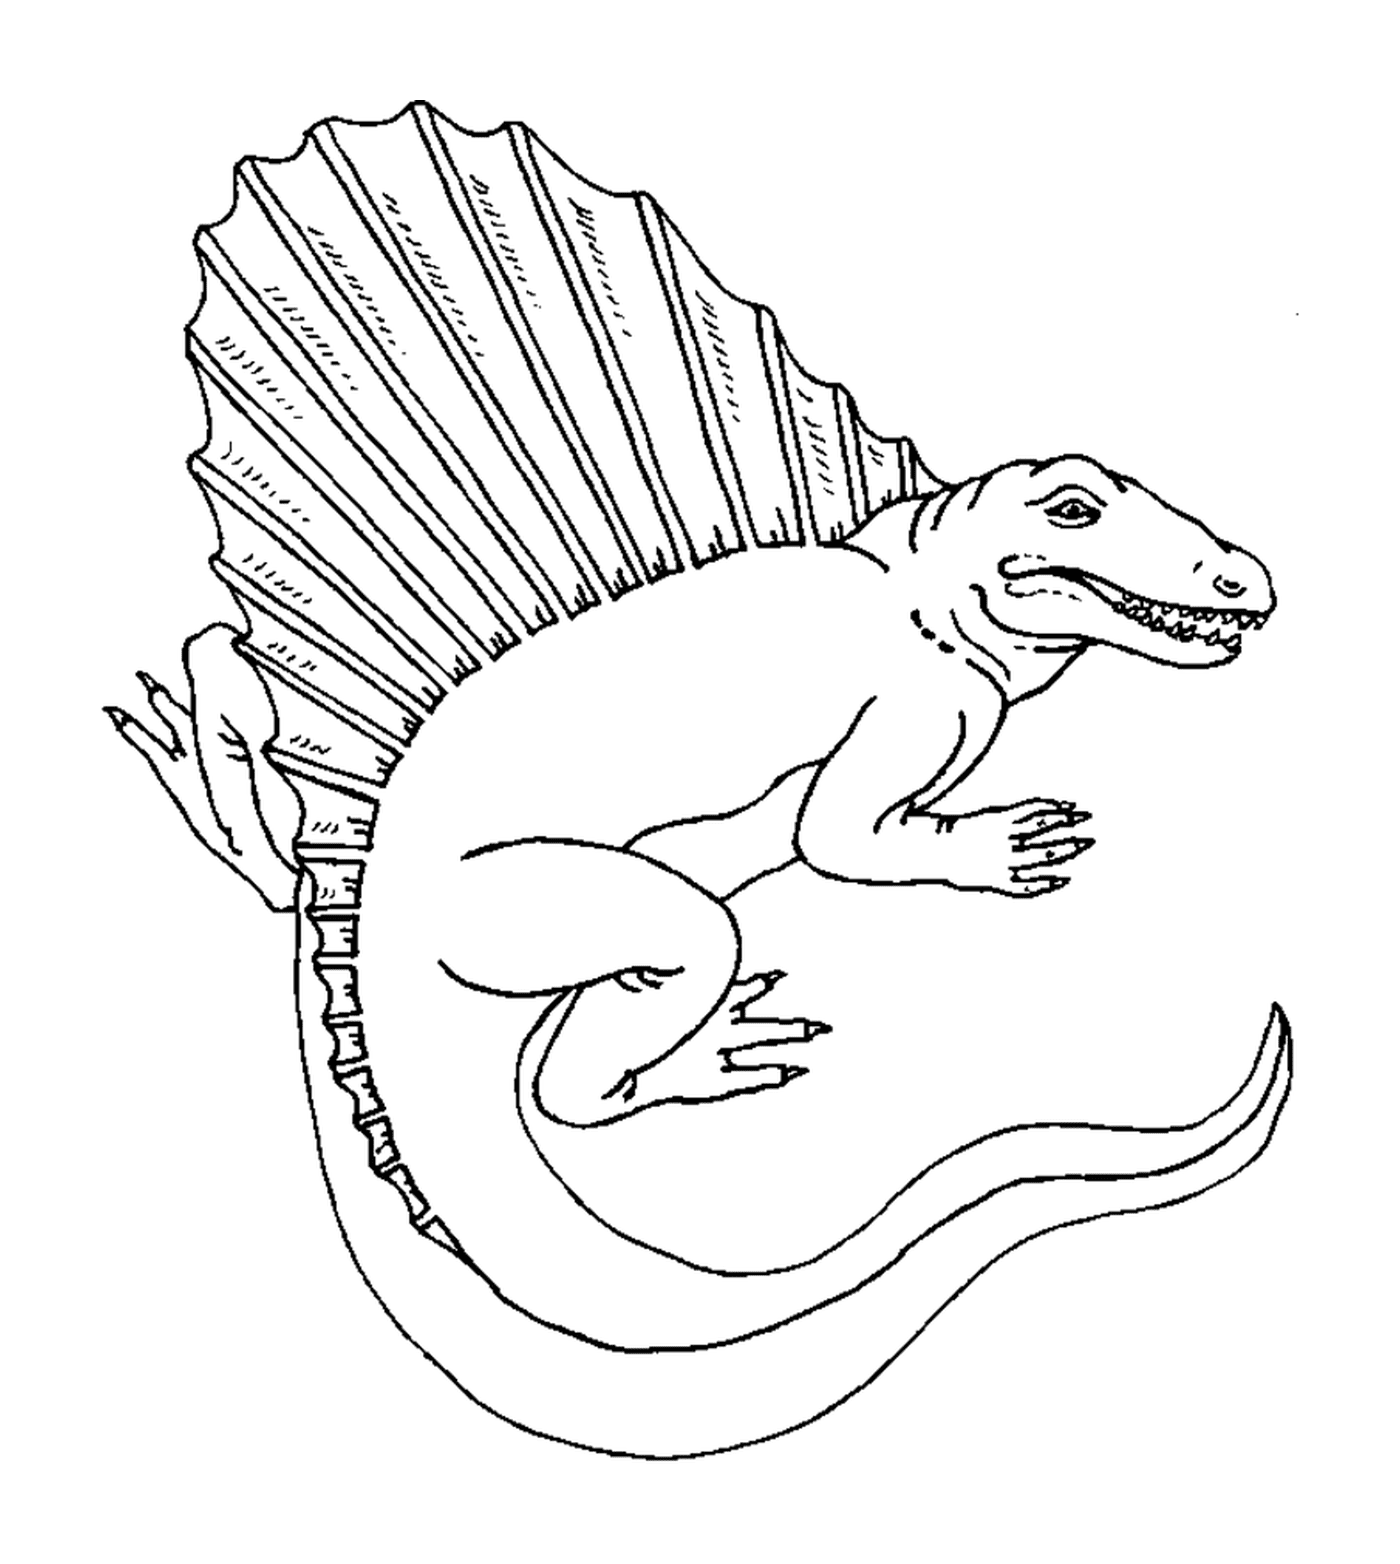  Рисунок точного и реалистичного динозавра 